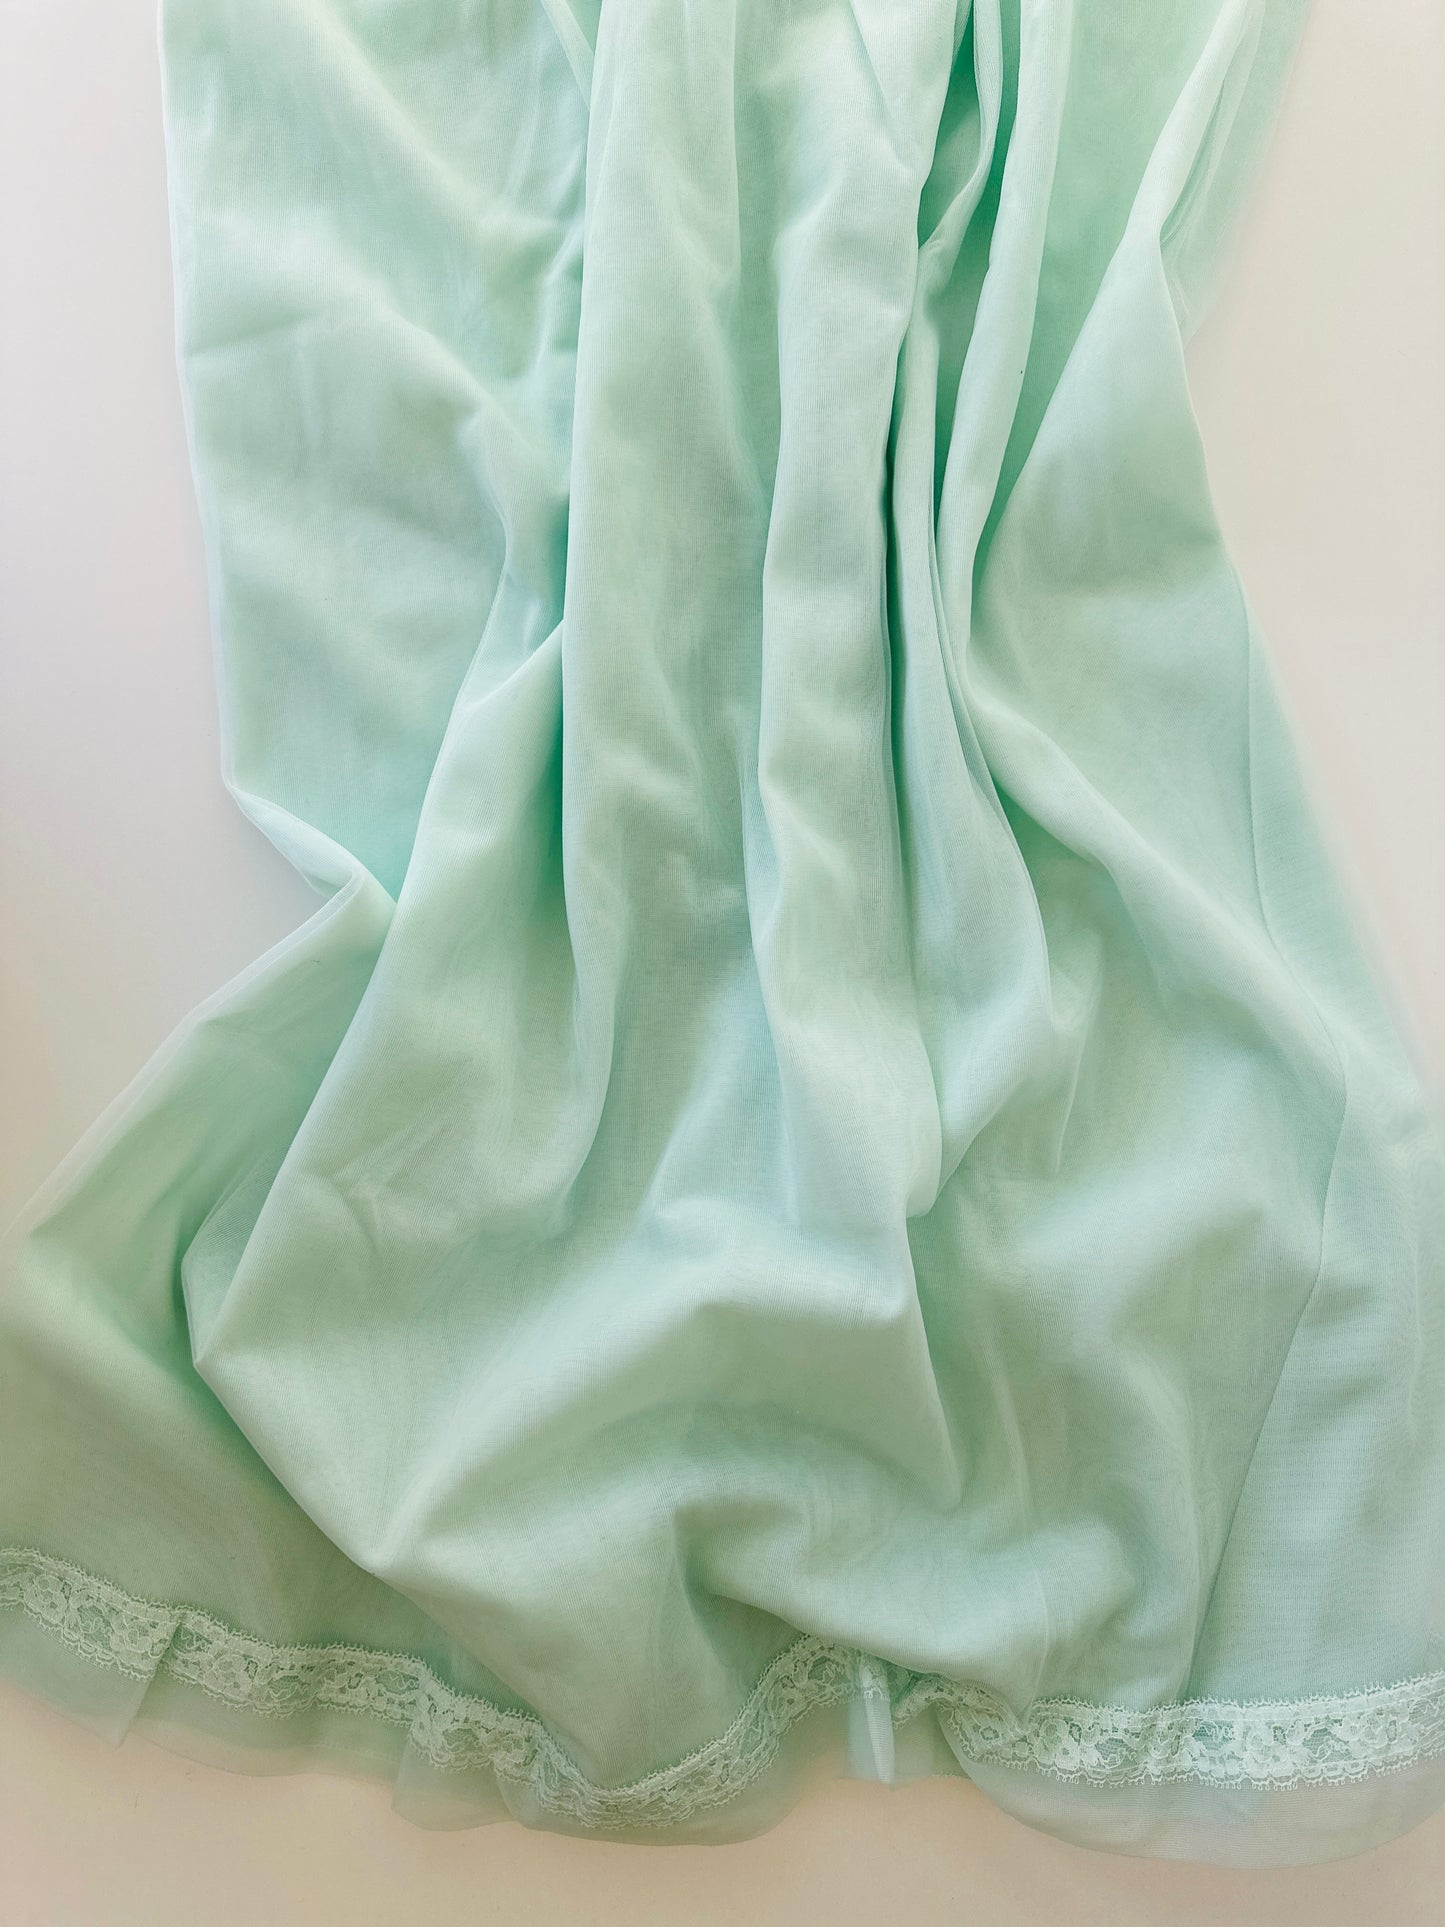 Peppermint Green Dress Nightie Photo Shoot W Tags NOS